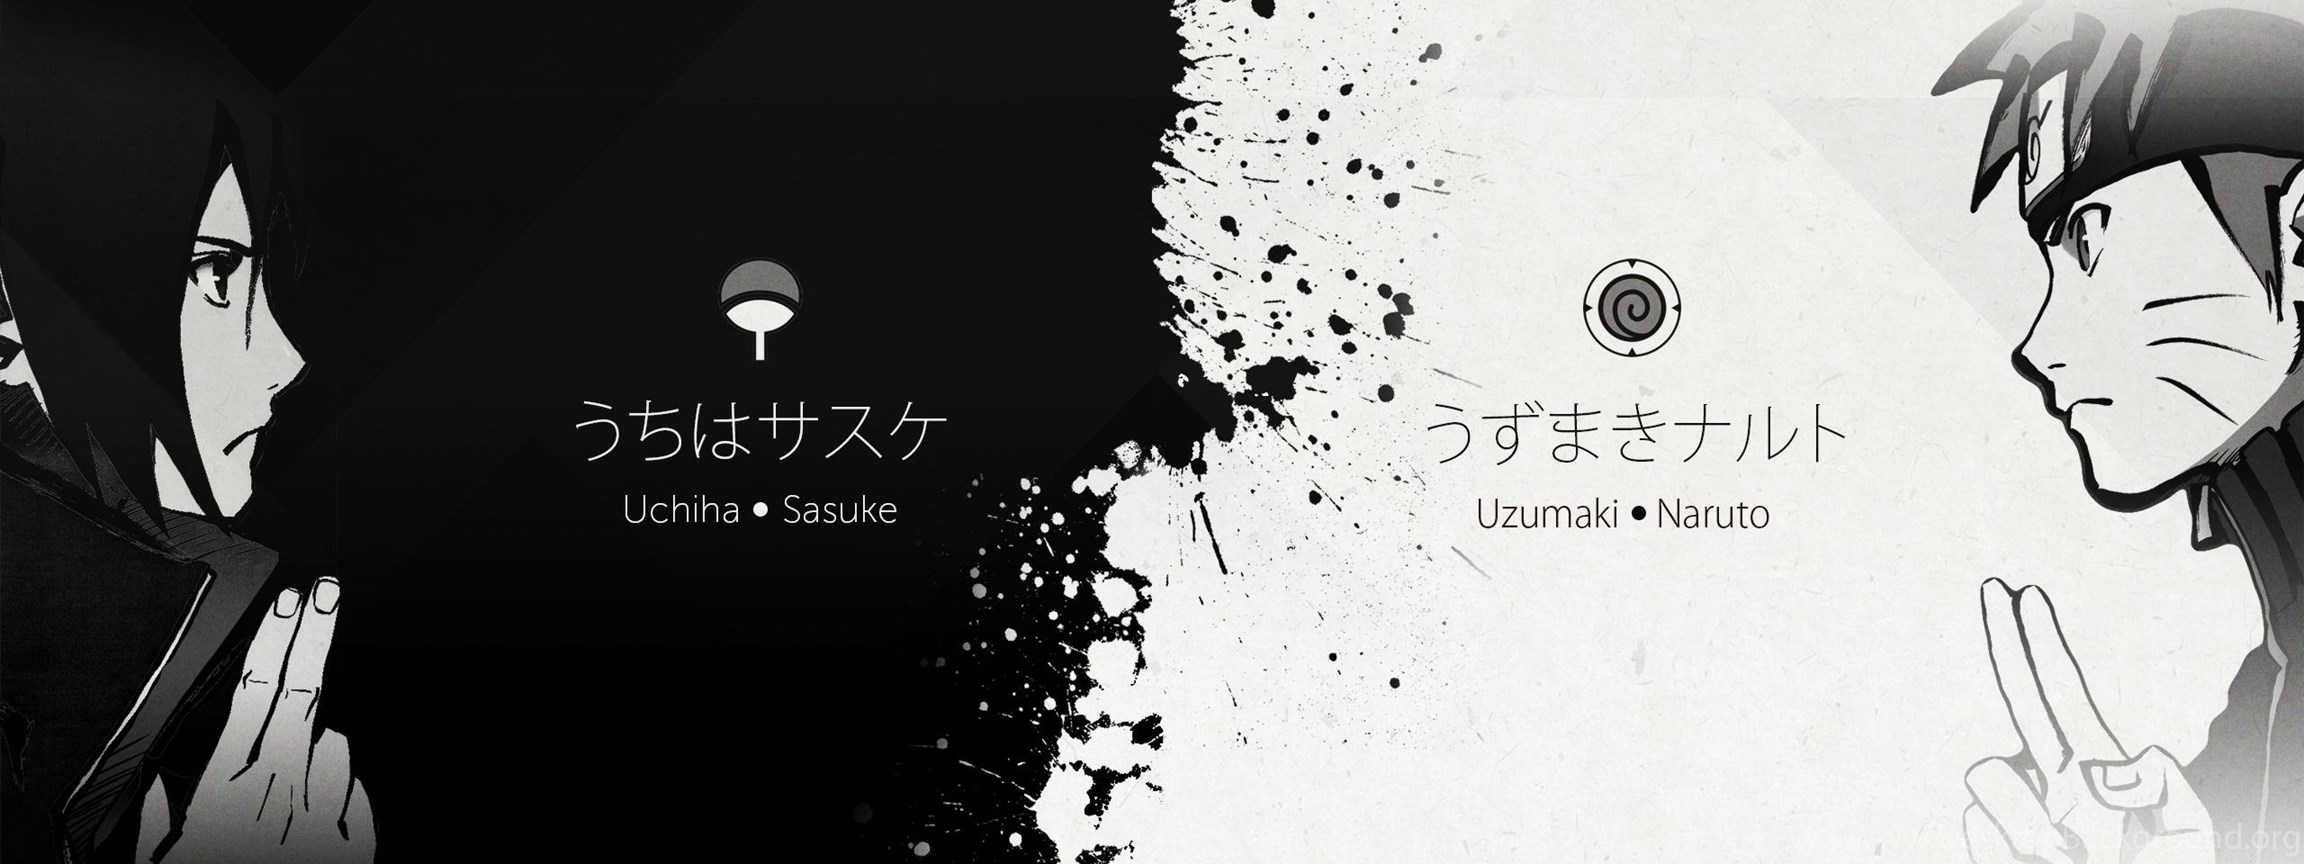 Download NARUTO SASUKE WALLPAPER ( Widescreen Dual Screen Wide 2304x864 Des...